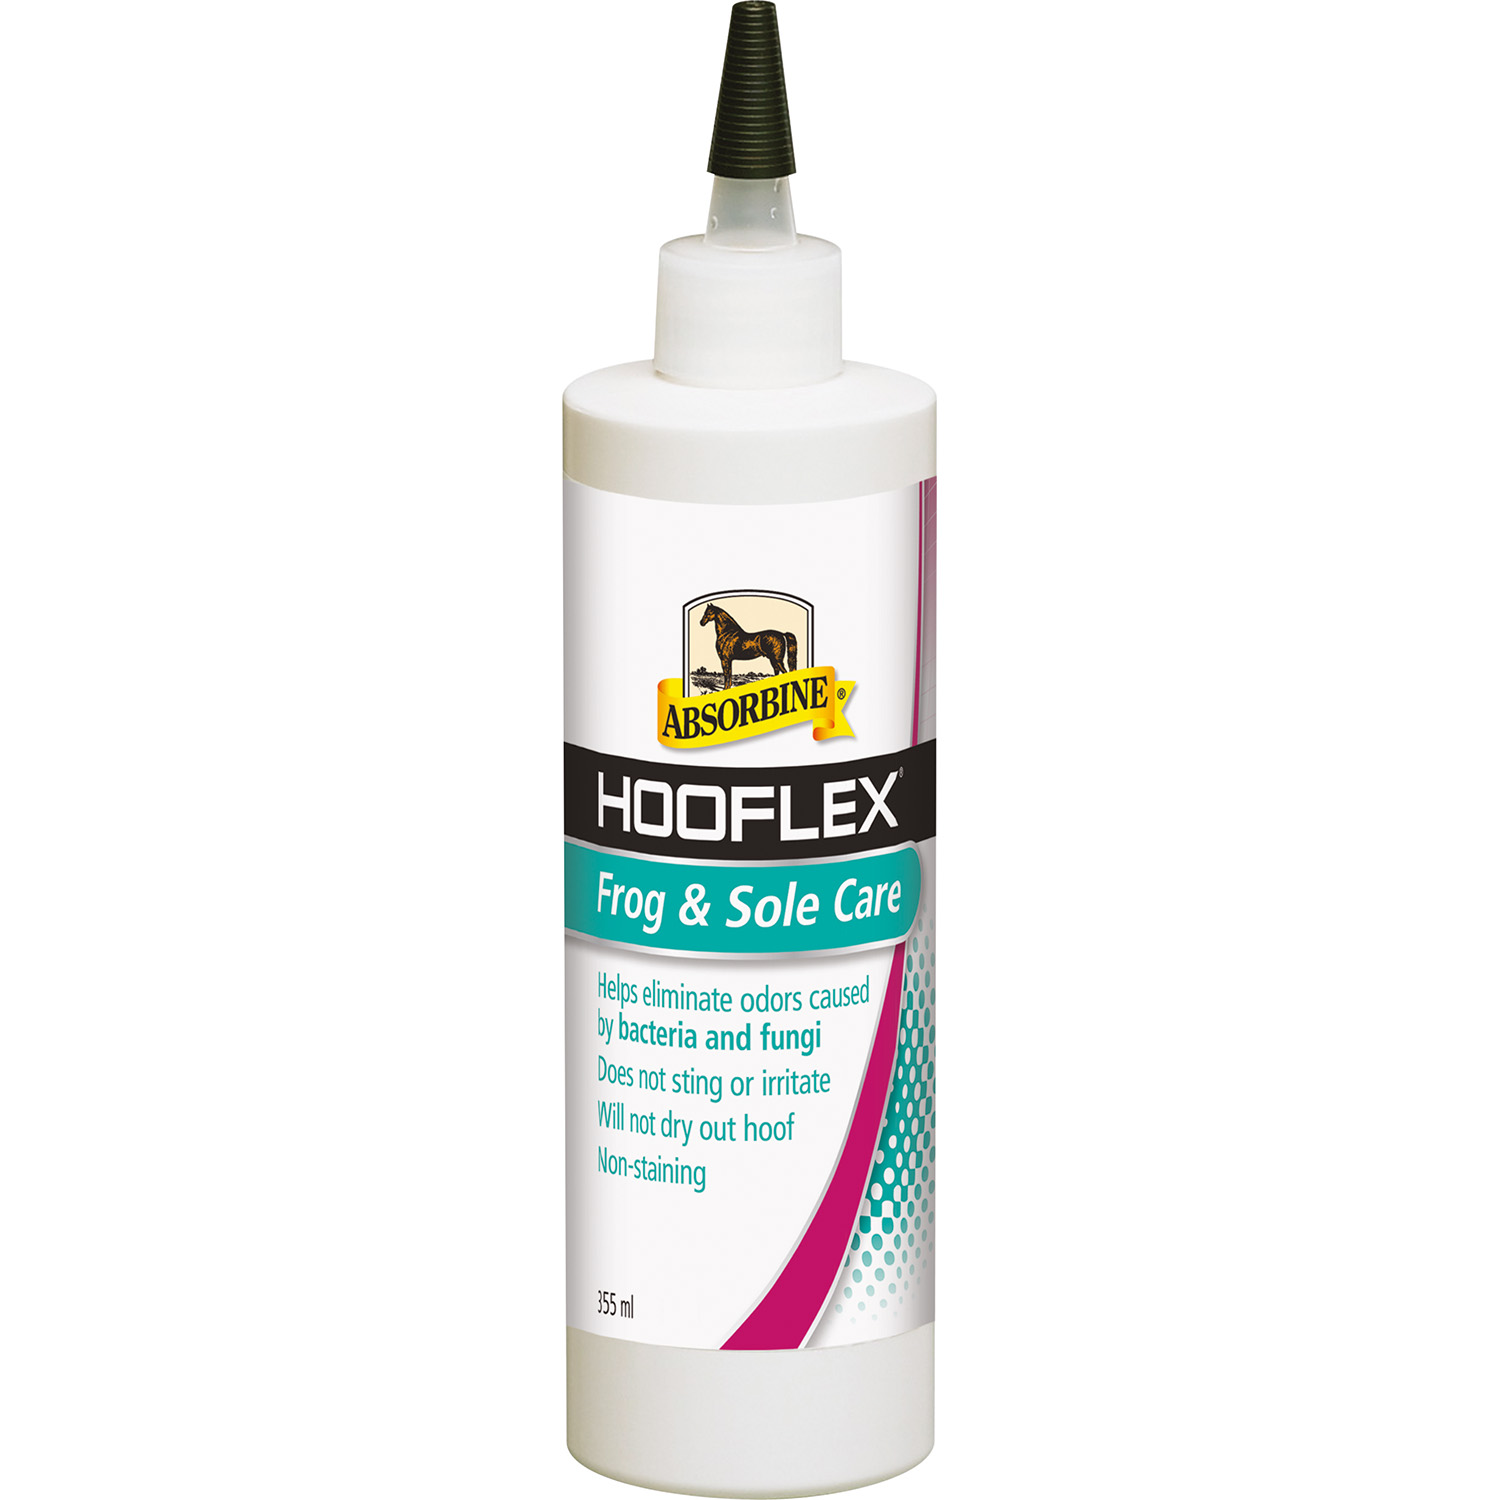 ABSORBINE HOOFLEX FROG & SOLE CARE ABSORBINE HOOFLEX FROG & SOLE CARE 355 ML  355 ML